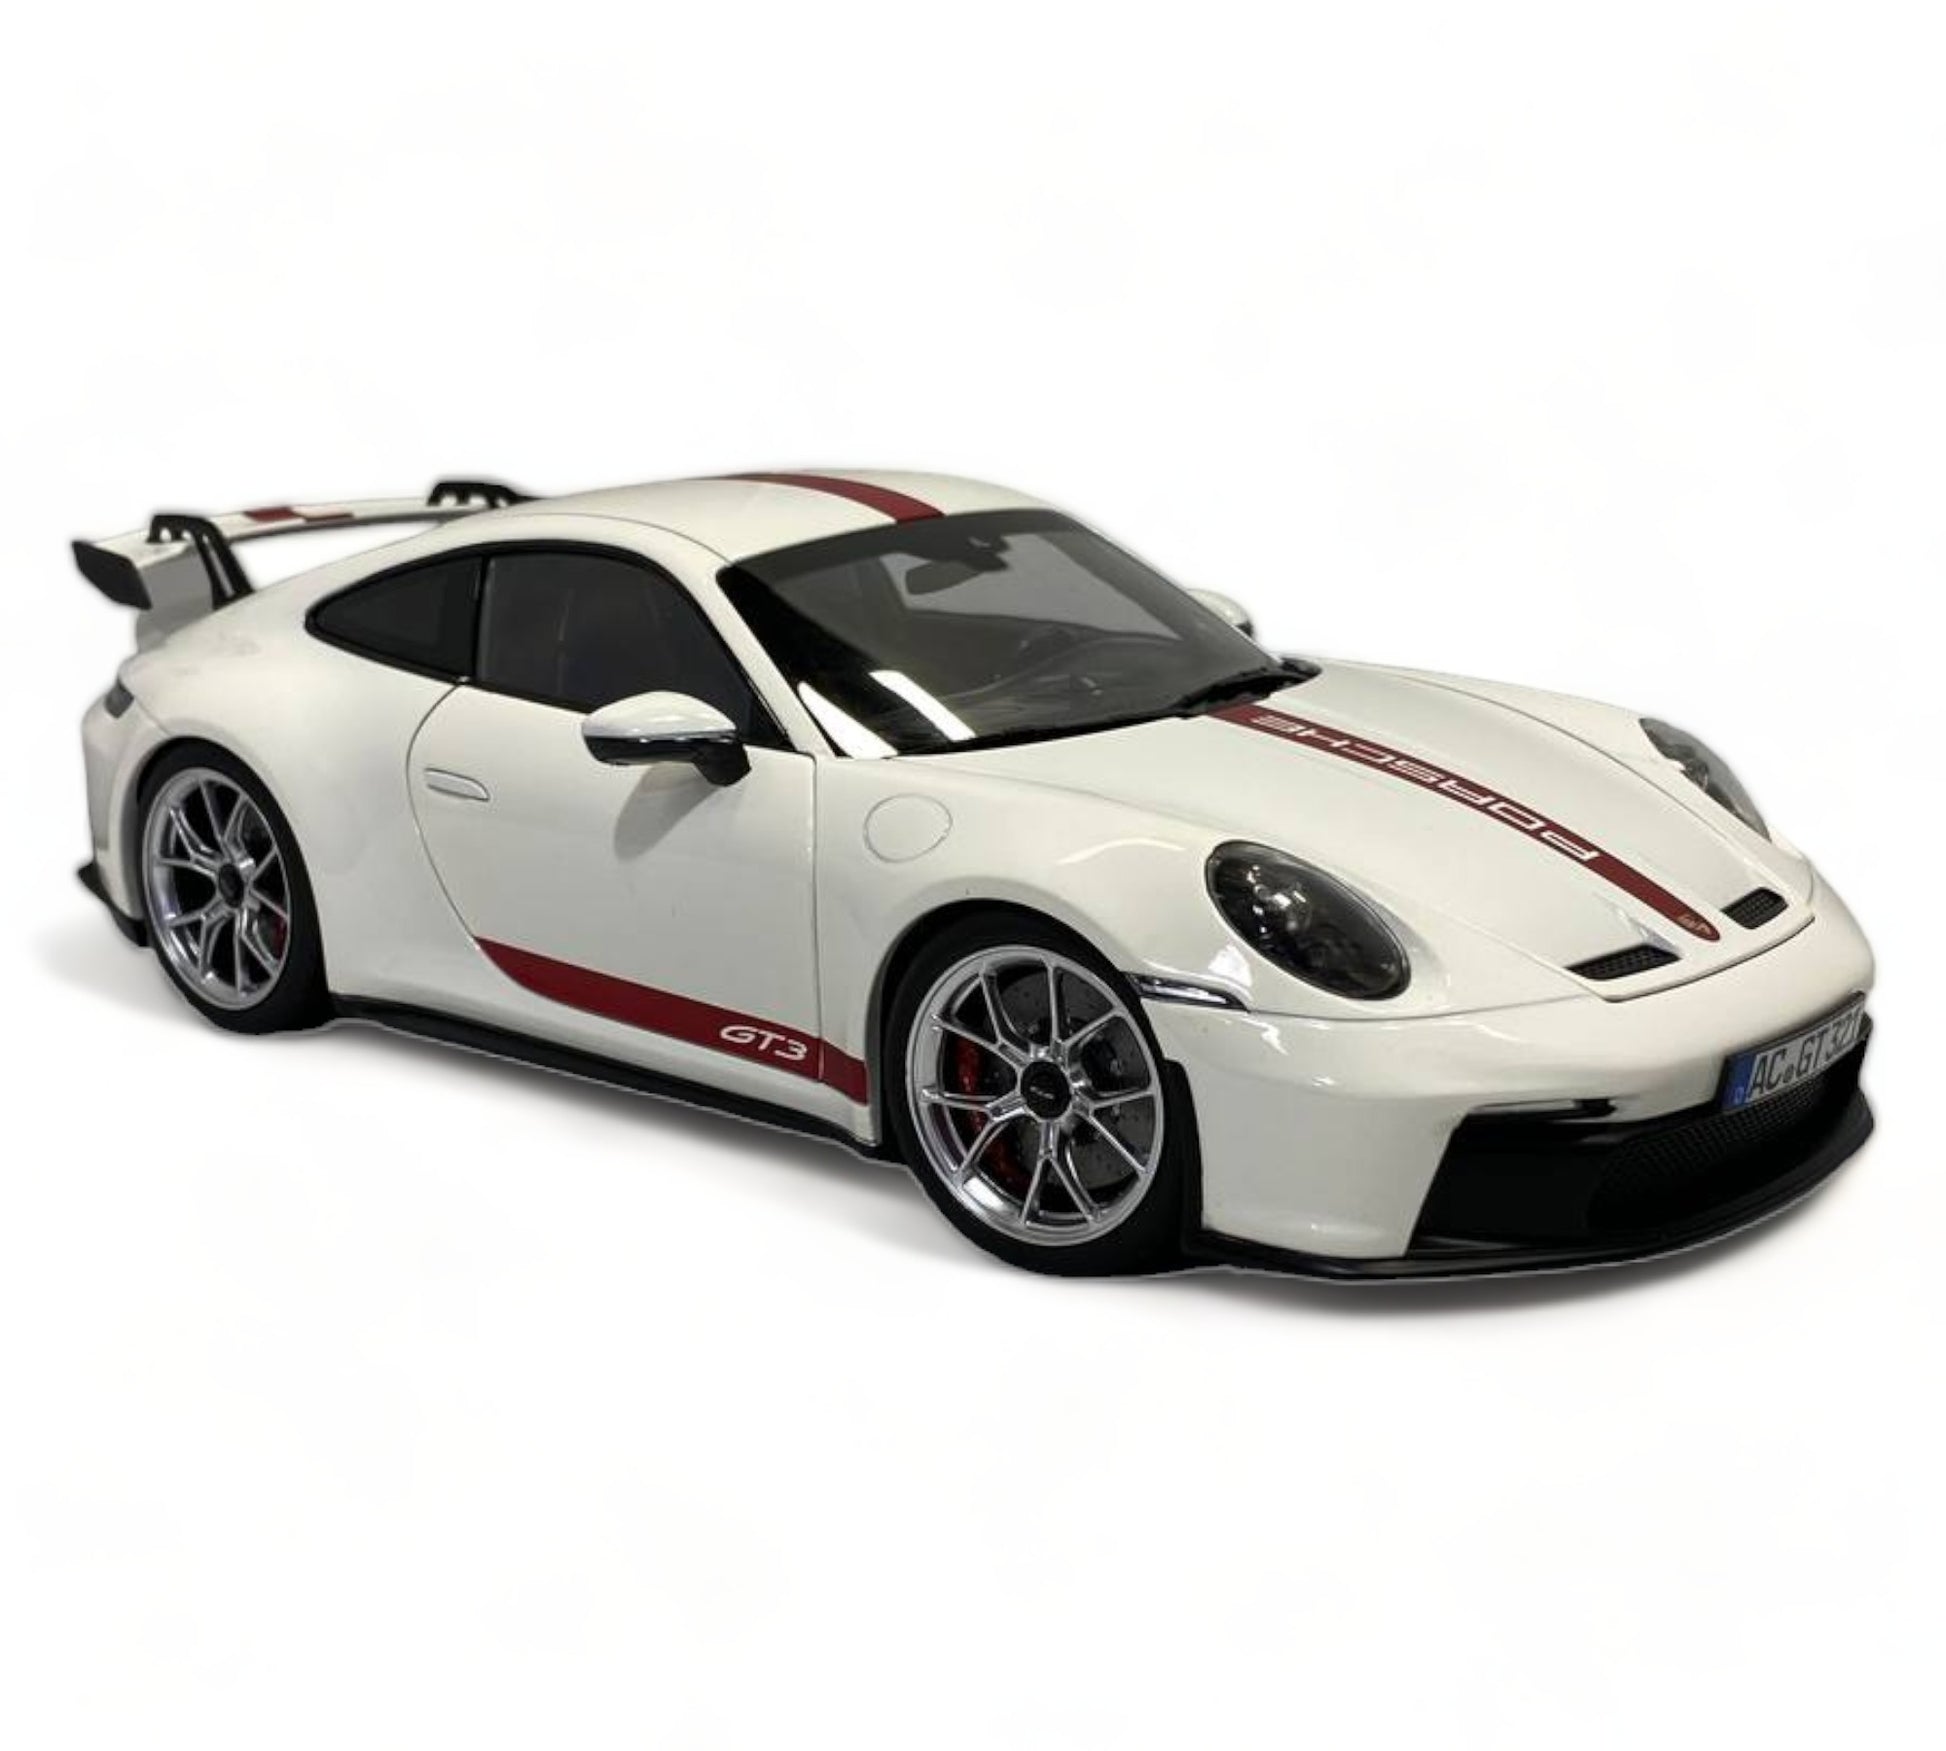 Norev Porsche 911 GT3 - 1/18 Diecast Model, White 2021|Sold in Dturman.com Dubai UAE.